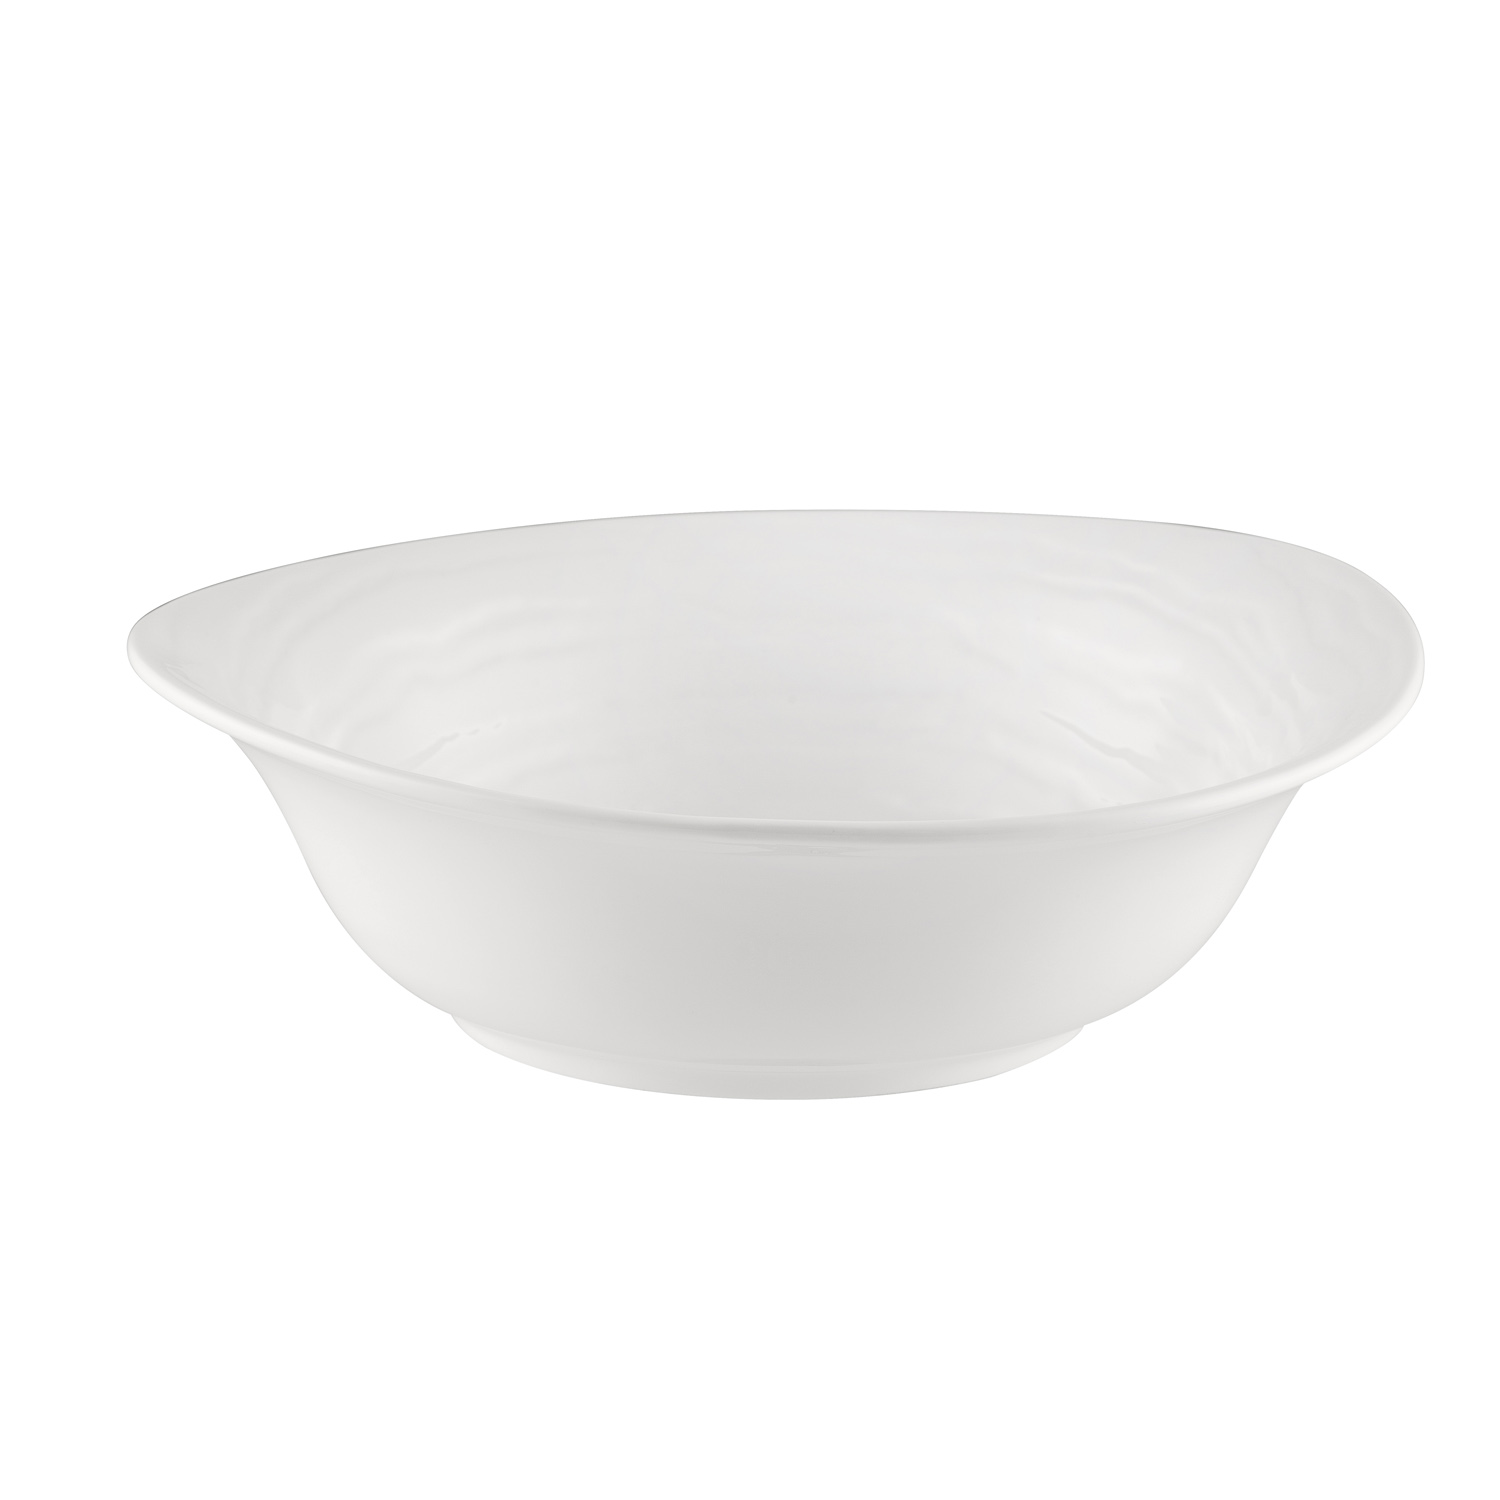 CAC China BHM-B10 Bahamas Bone White Porcelain Bowl 37.25 oz., 10" - 1 dozen